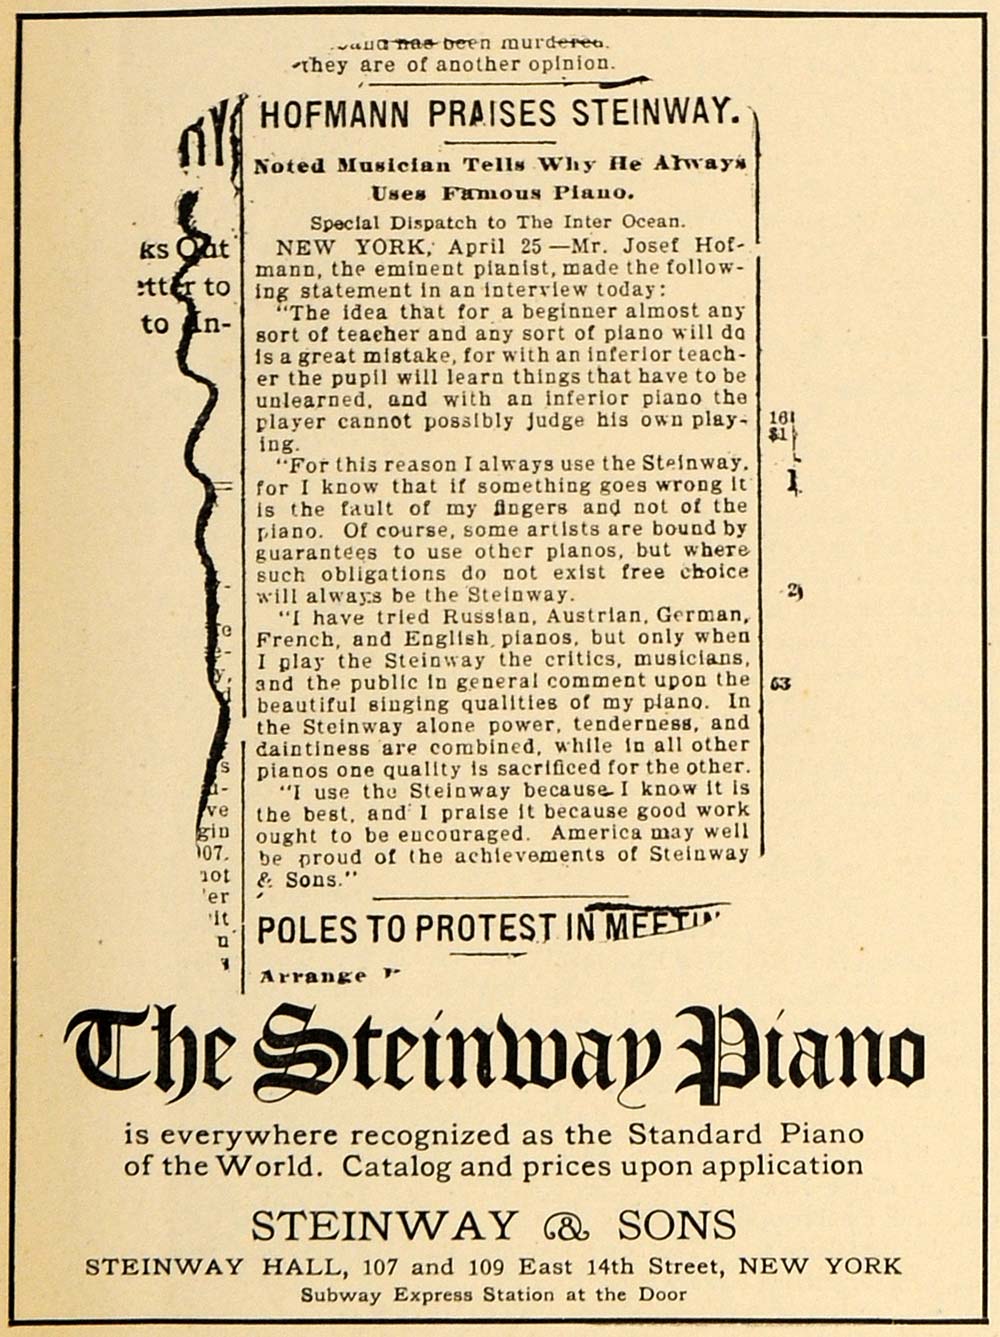 1908 Ad Steinway Pianos Josef Hofmann Pianist Praise - ORIGINAL ADVERTISING MUS1